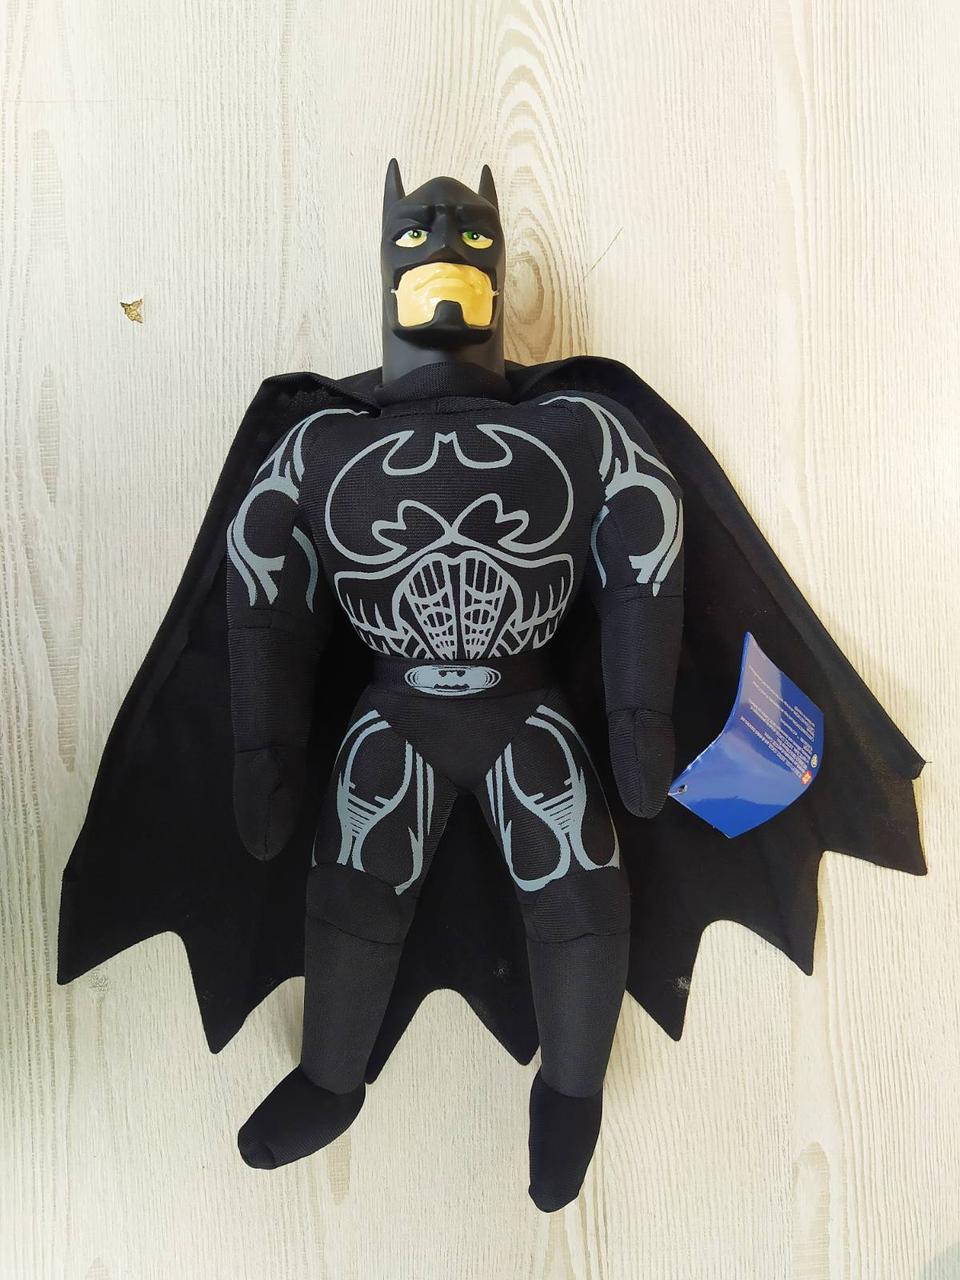 Мягкая игрушка "Бэтмен" рост 41 см